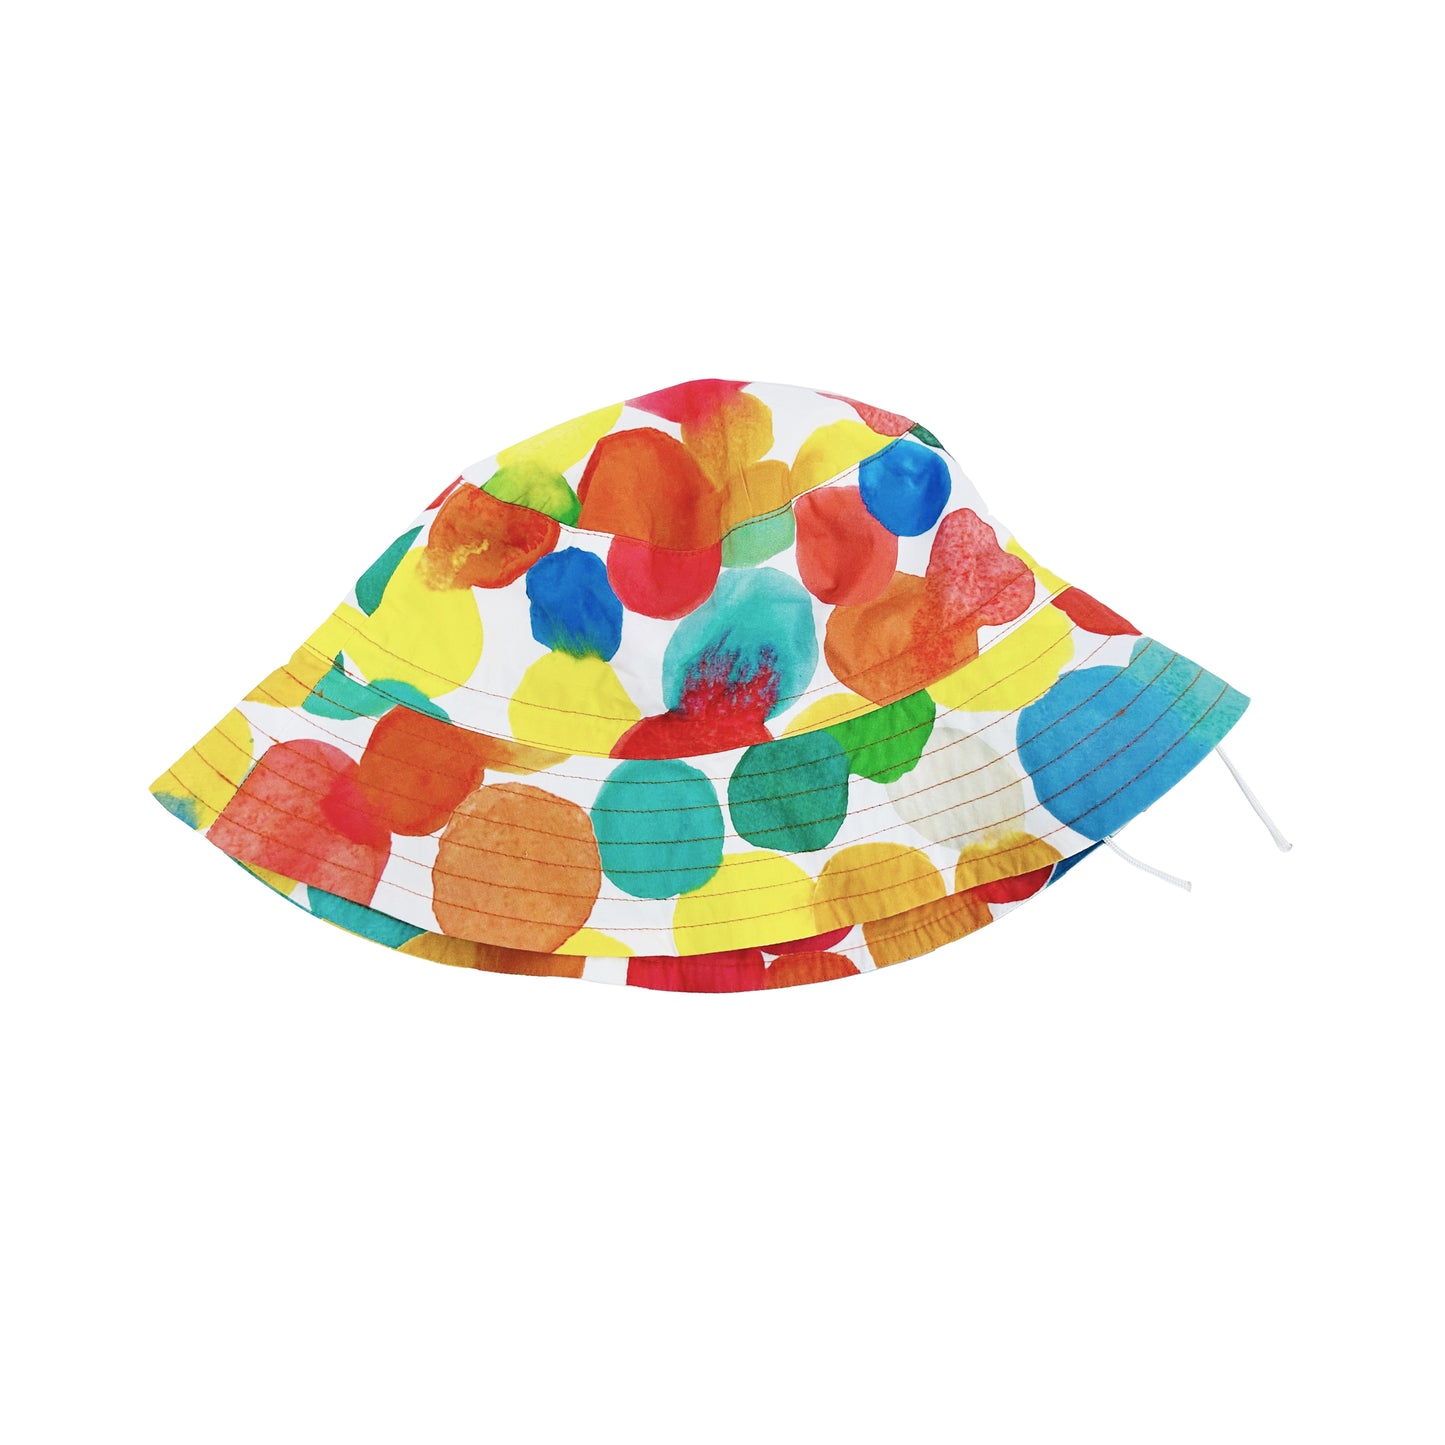 KIDS/WOMEN'S RAINBOW SPOT PRINT BUCKET HAT